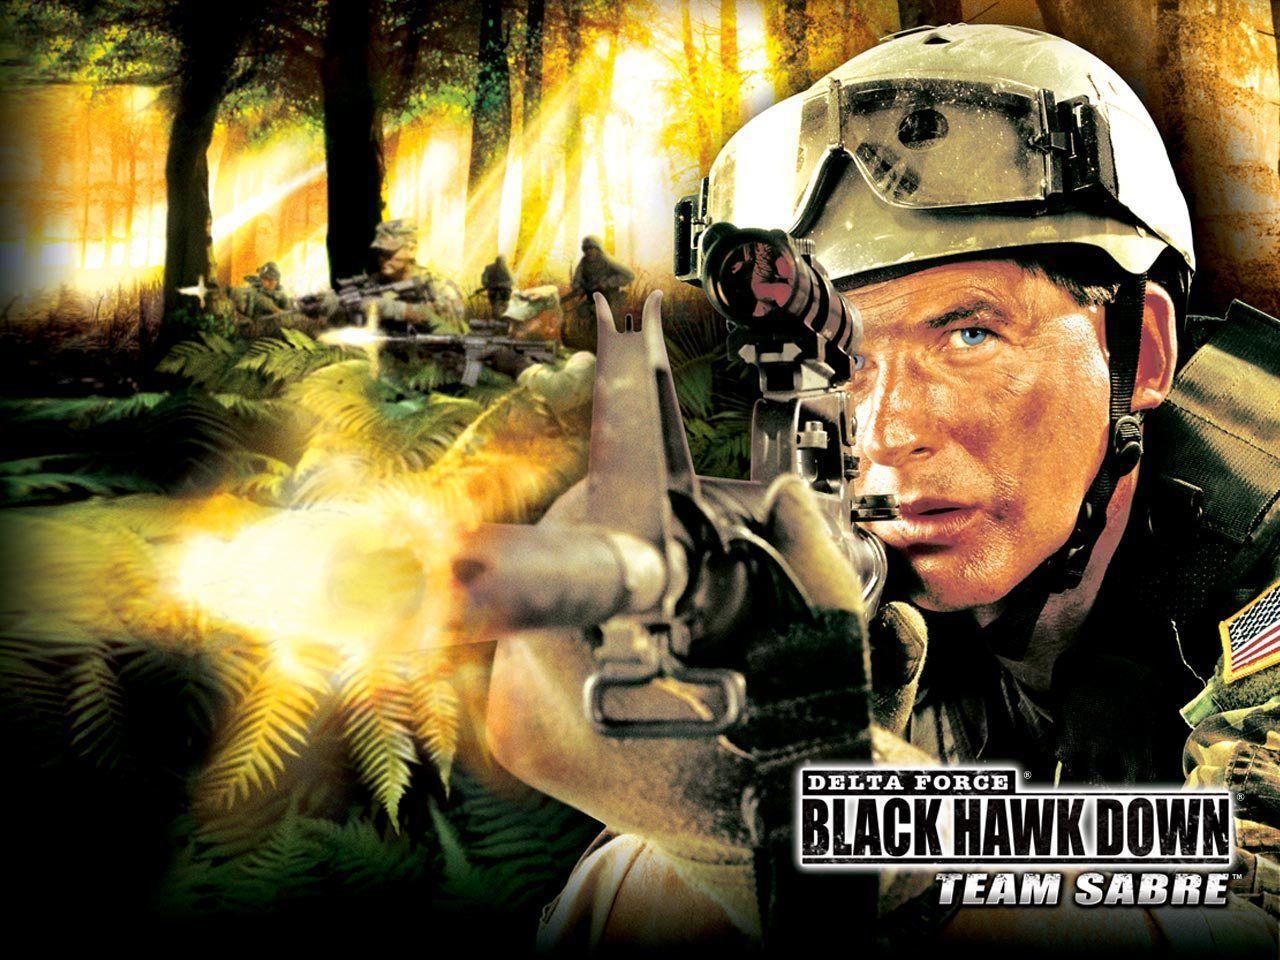 Black Hawk Down Wallpapers - Wallpaper Cave